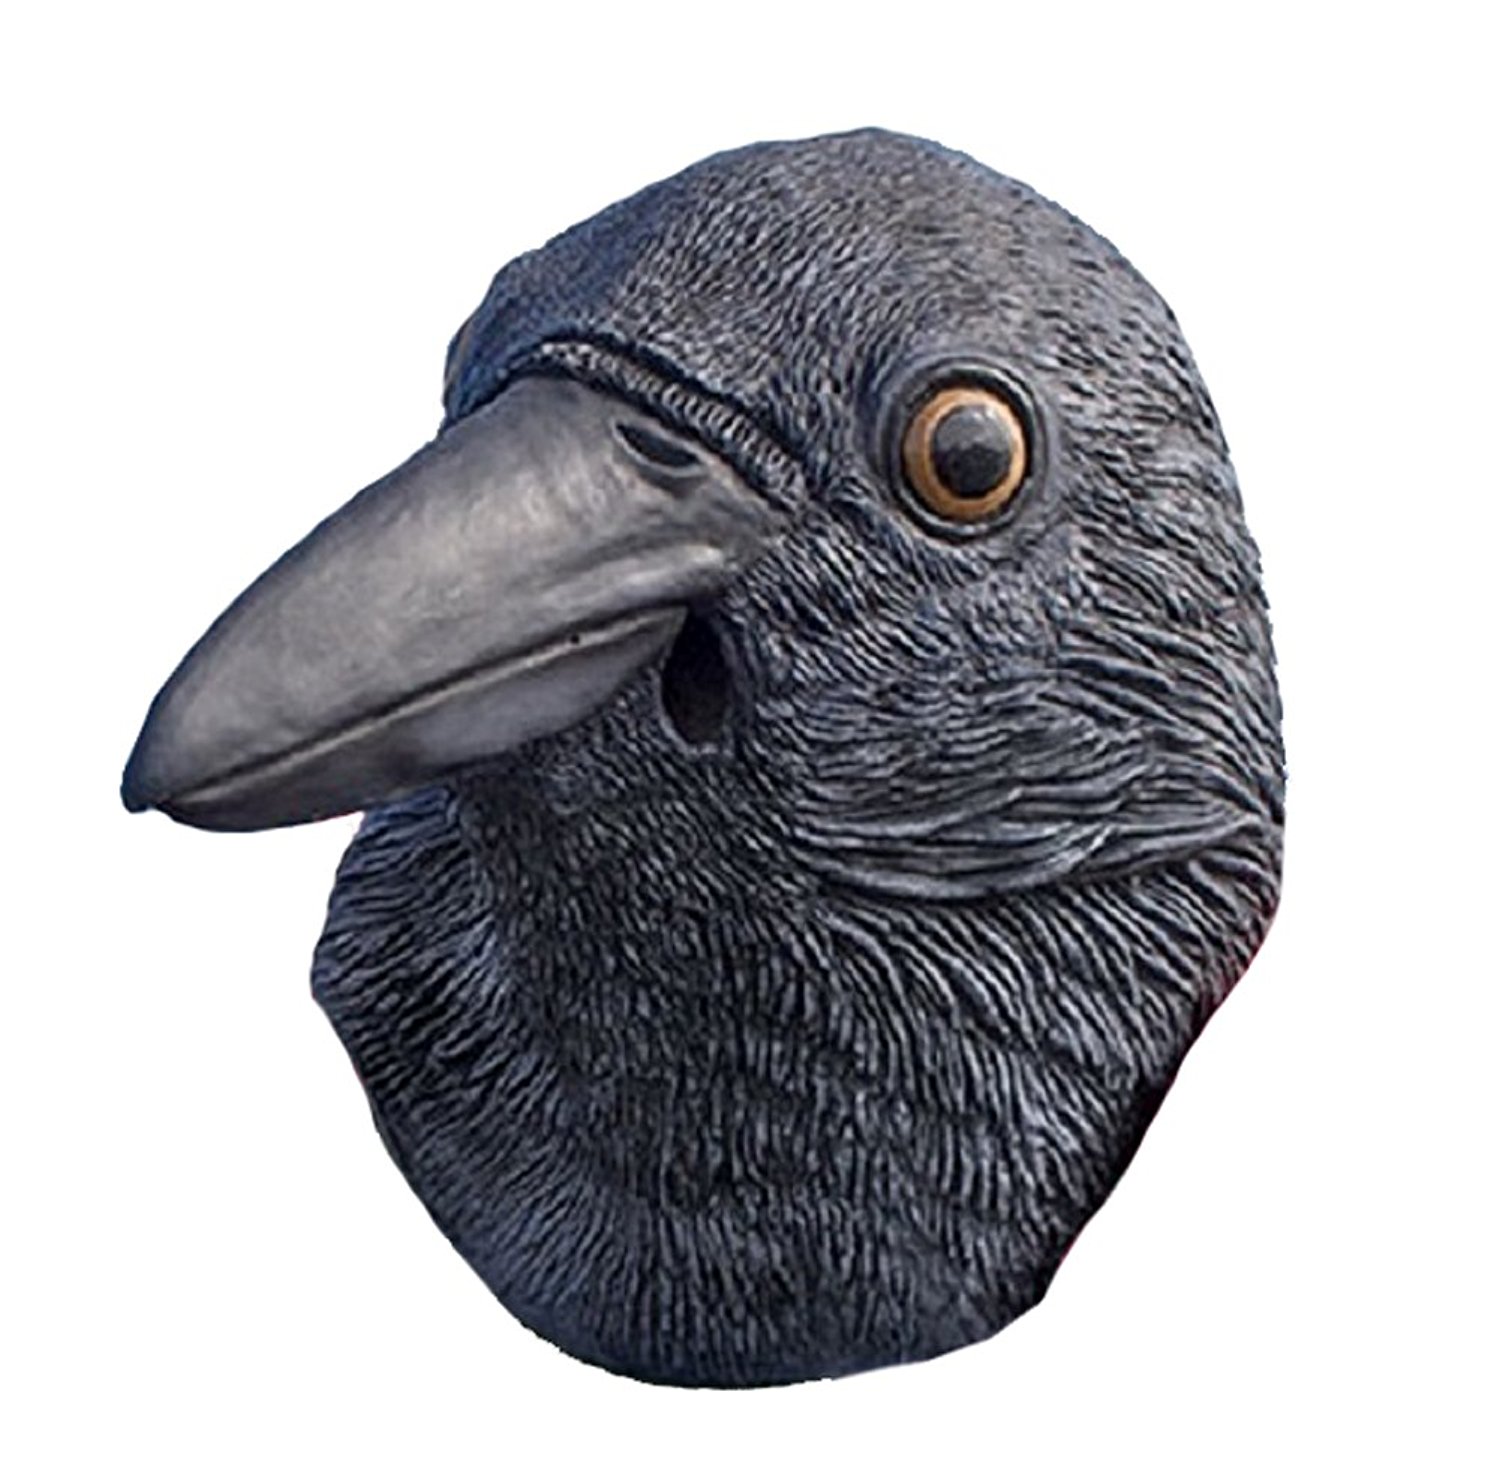 Amazon.com: Realistic Black Crow Mask Full Face Rubber Latex Costume ...